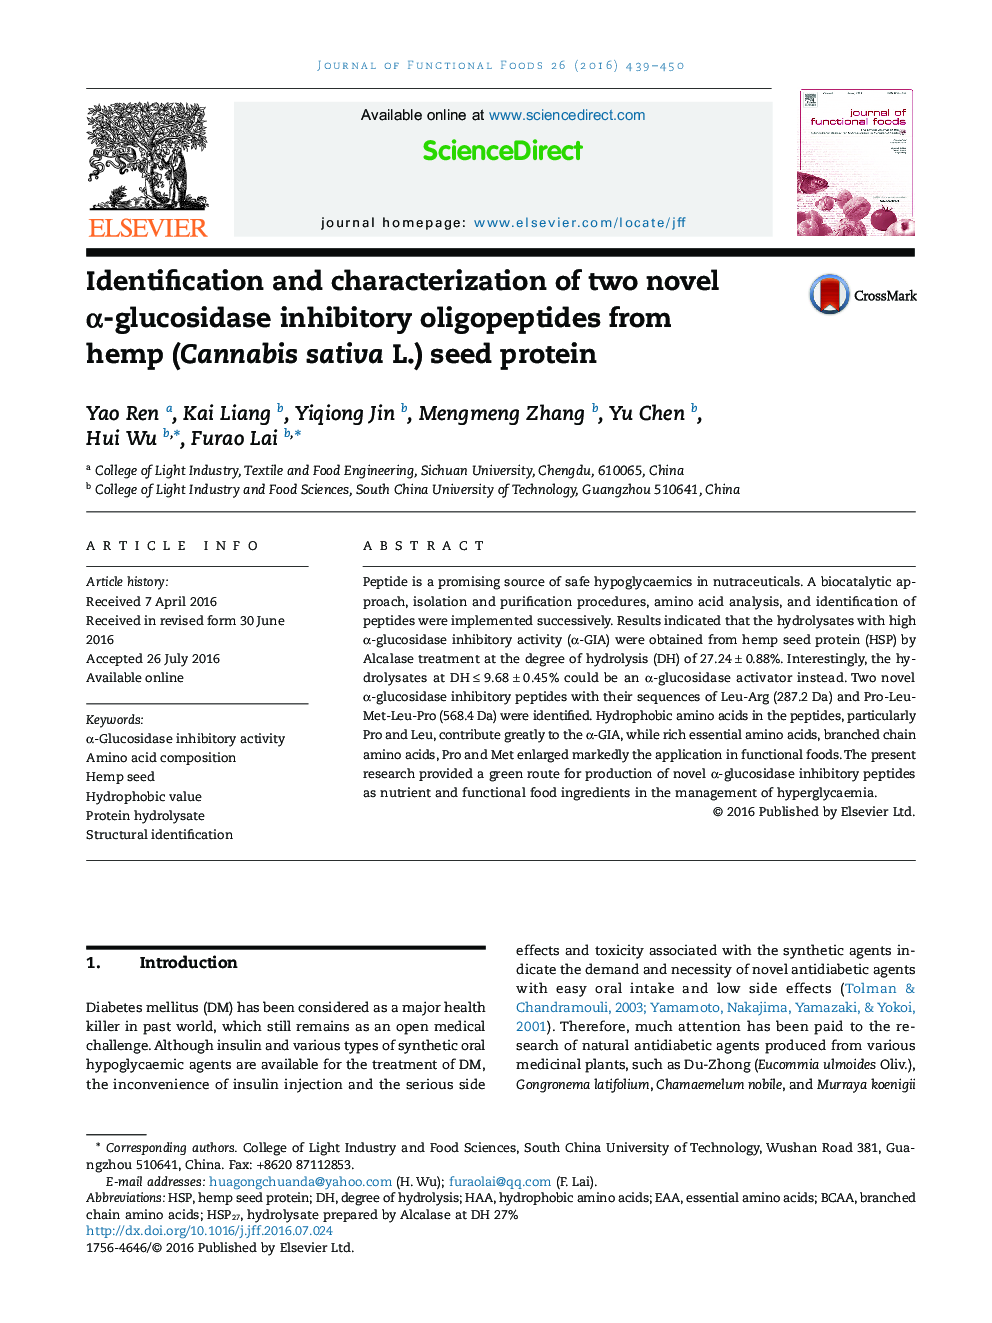 Identification and characterization of two novel Î±-glucosidase inhibitory oligopeptides from hemp (Cannabis sativa L.) seed protein